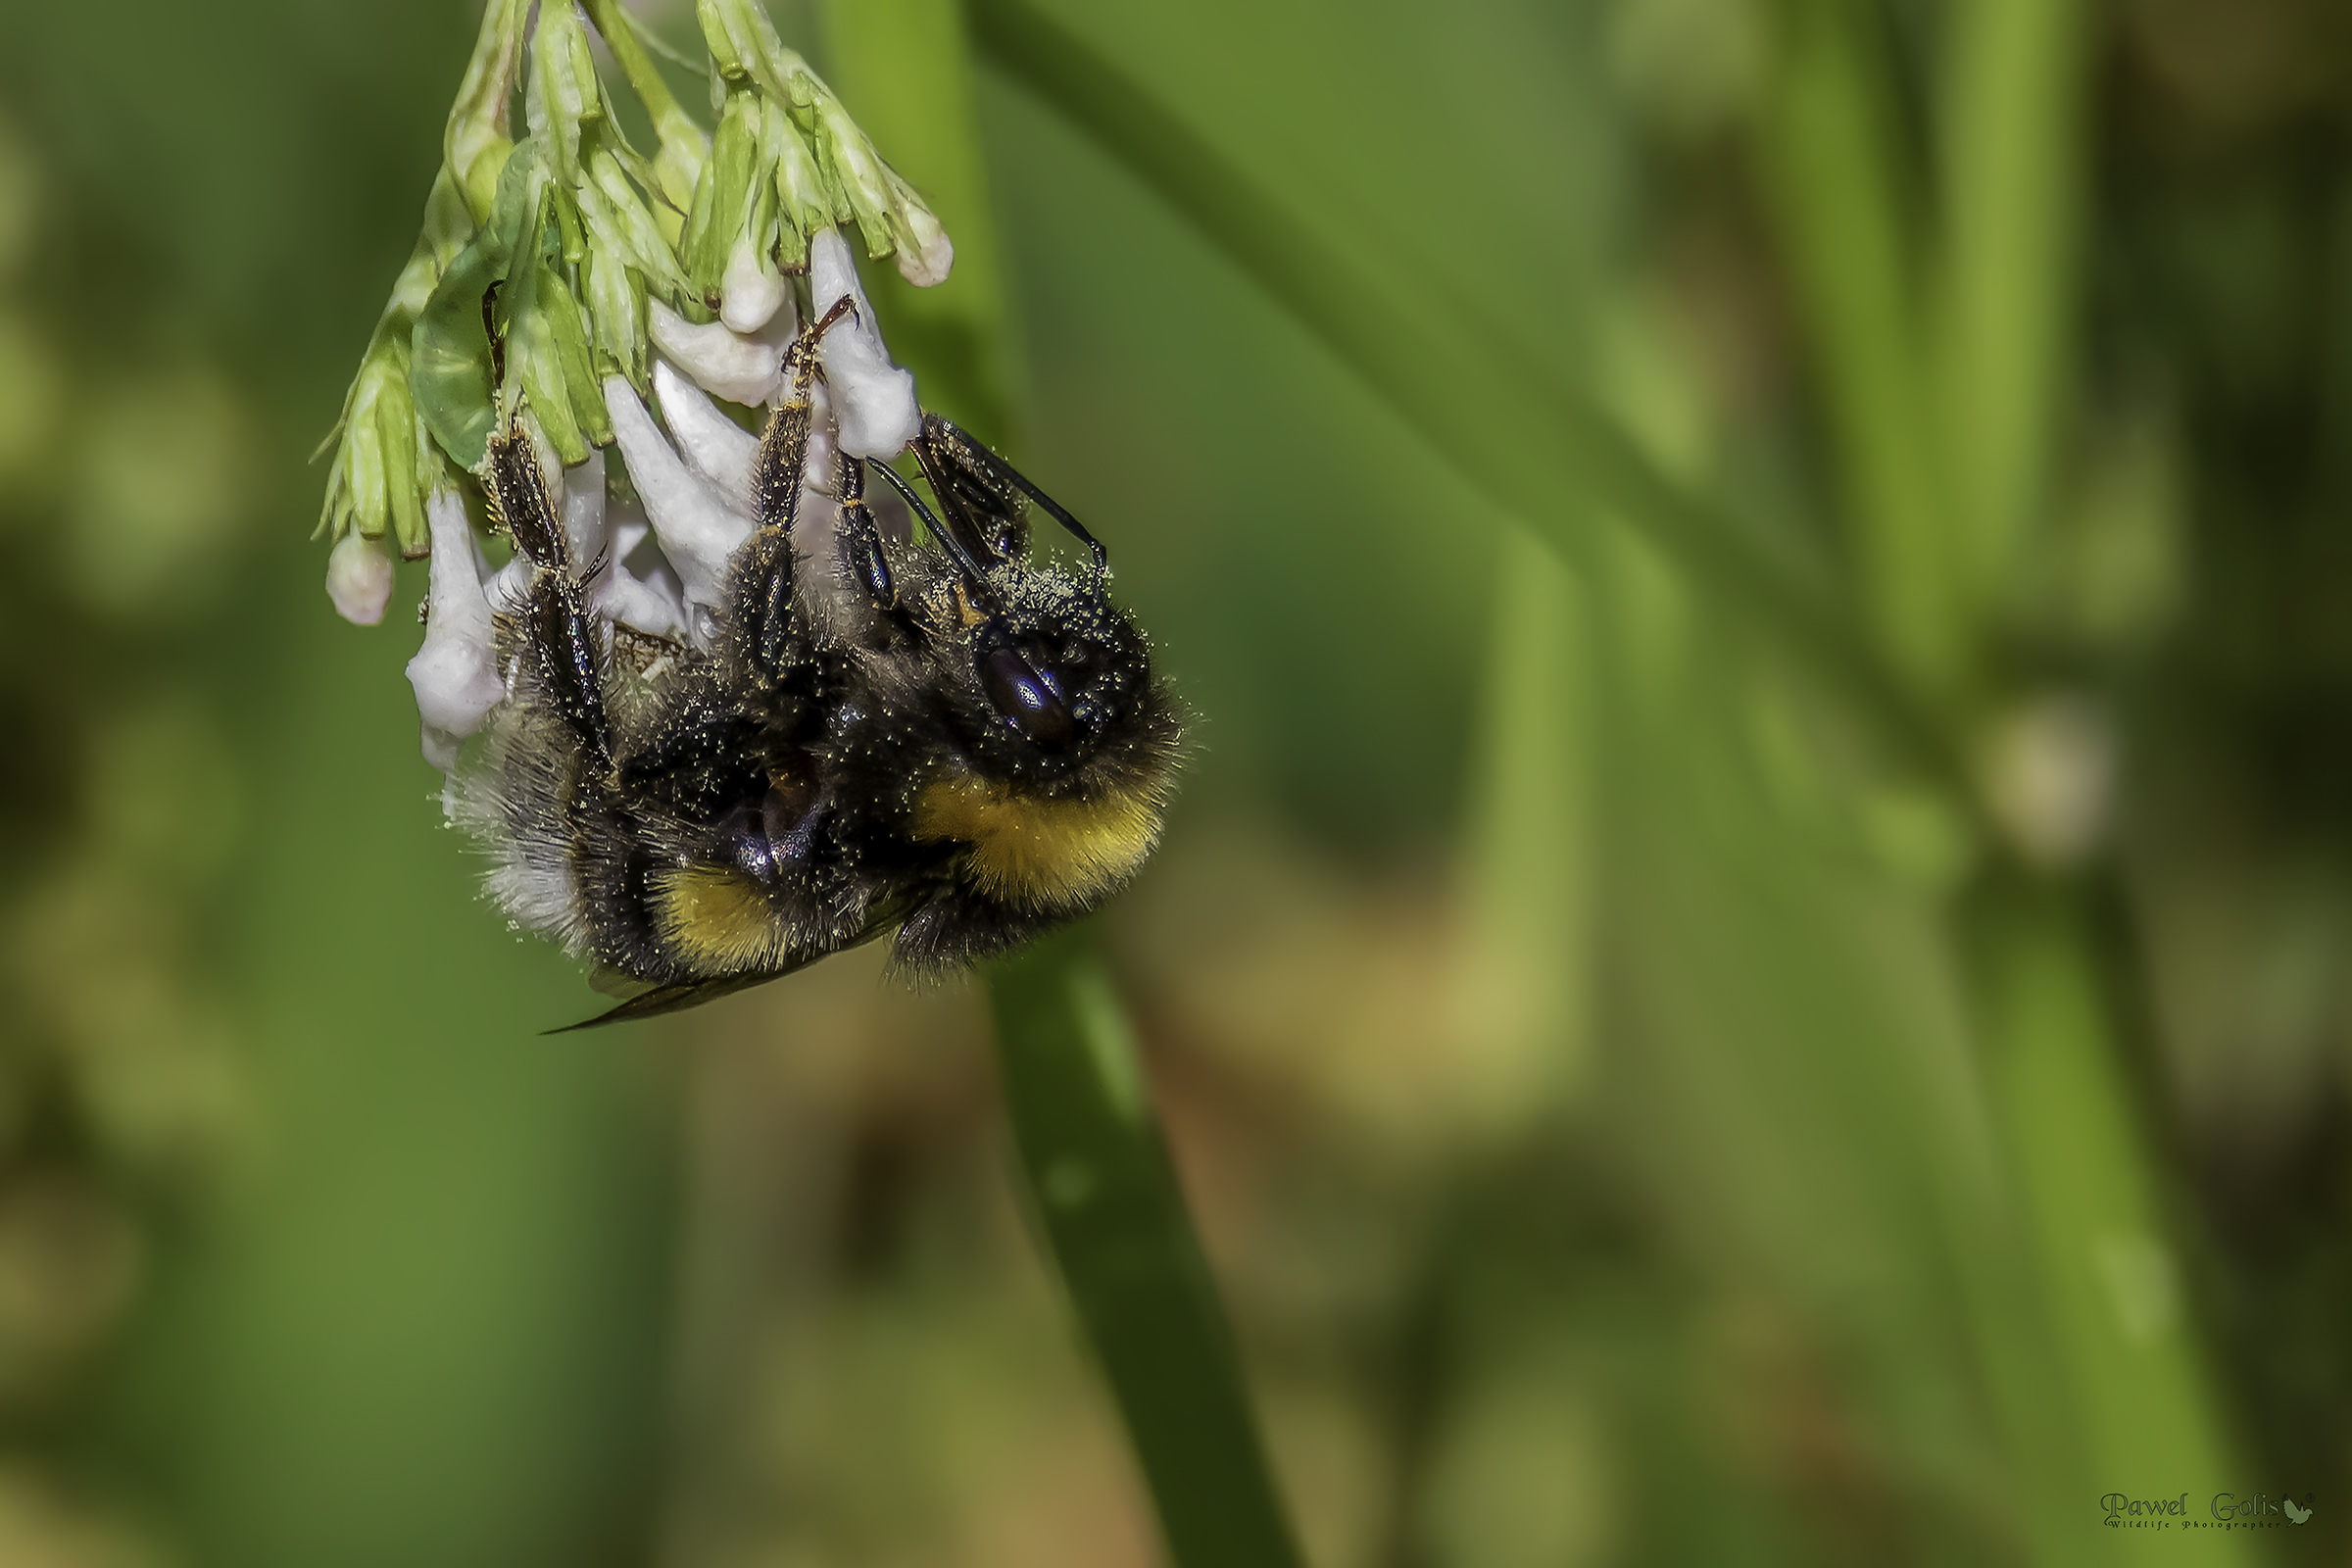 Buff-tailed bumblebee (Bombus terrestris)...